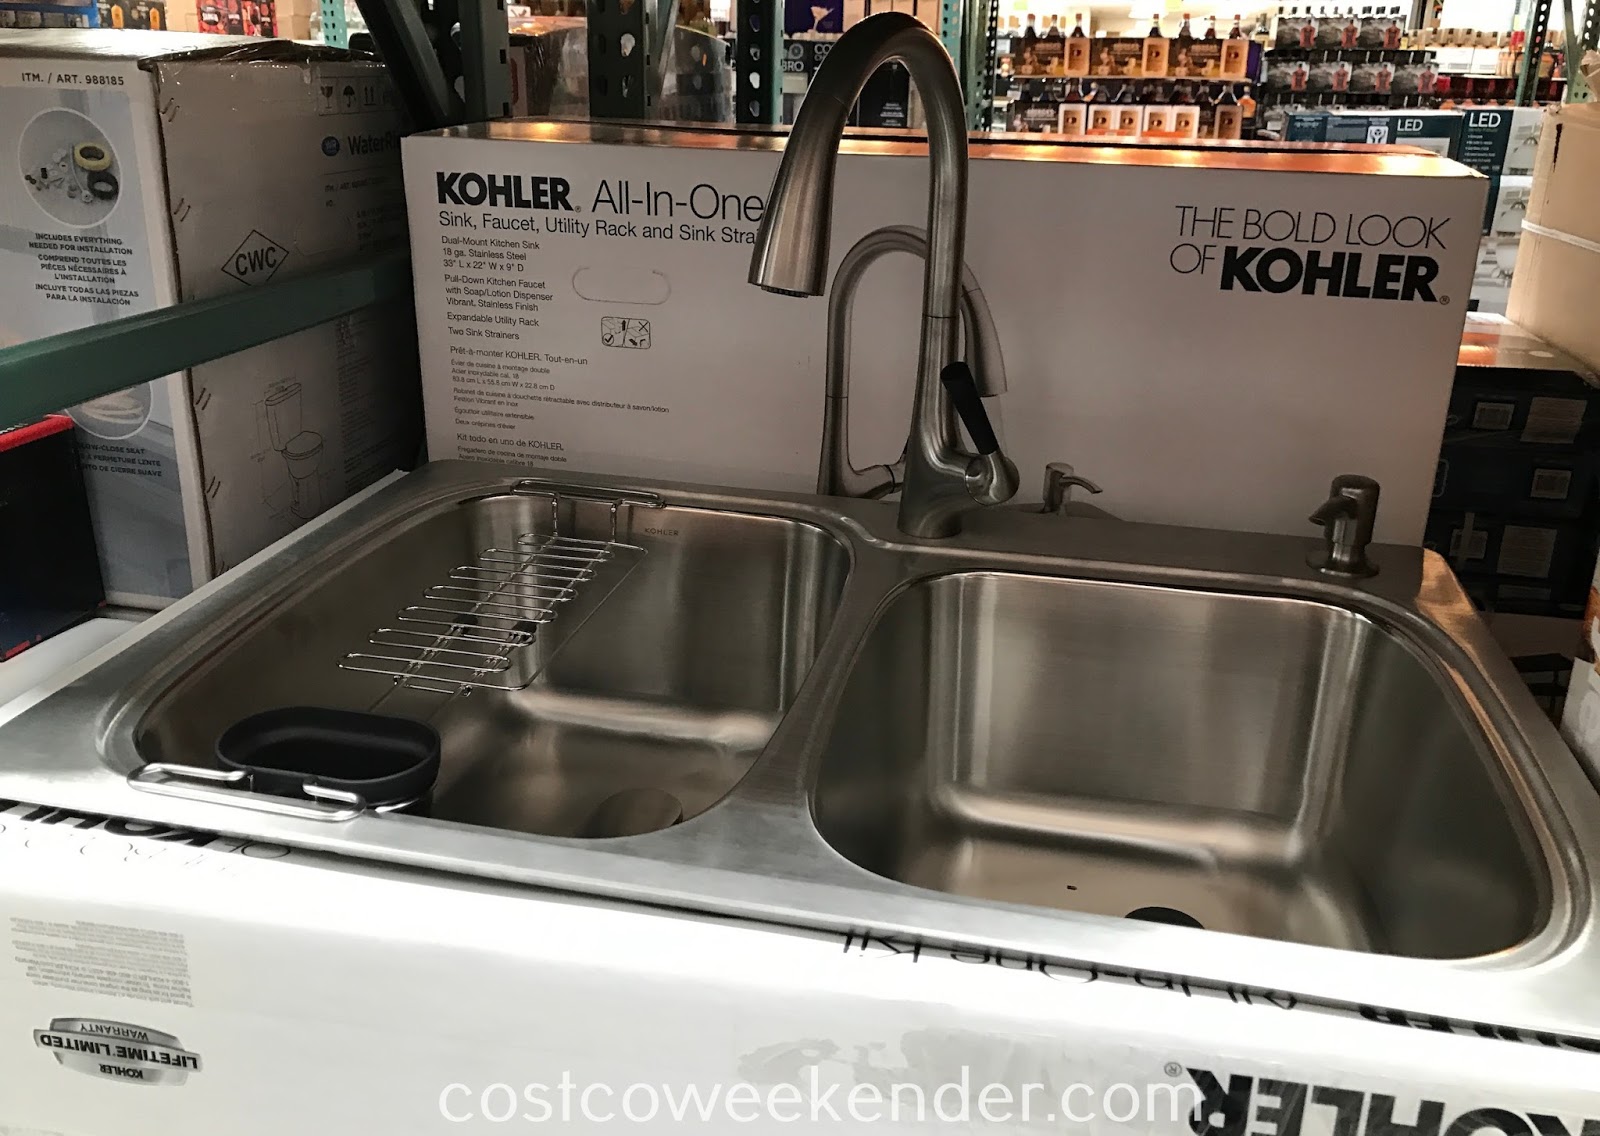 Kohler All In One Stainless Steel Sink And Faucet Kit Costco Weekender